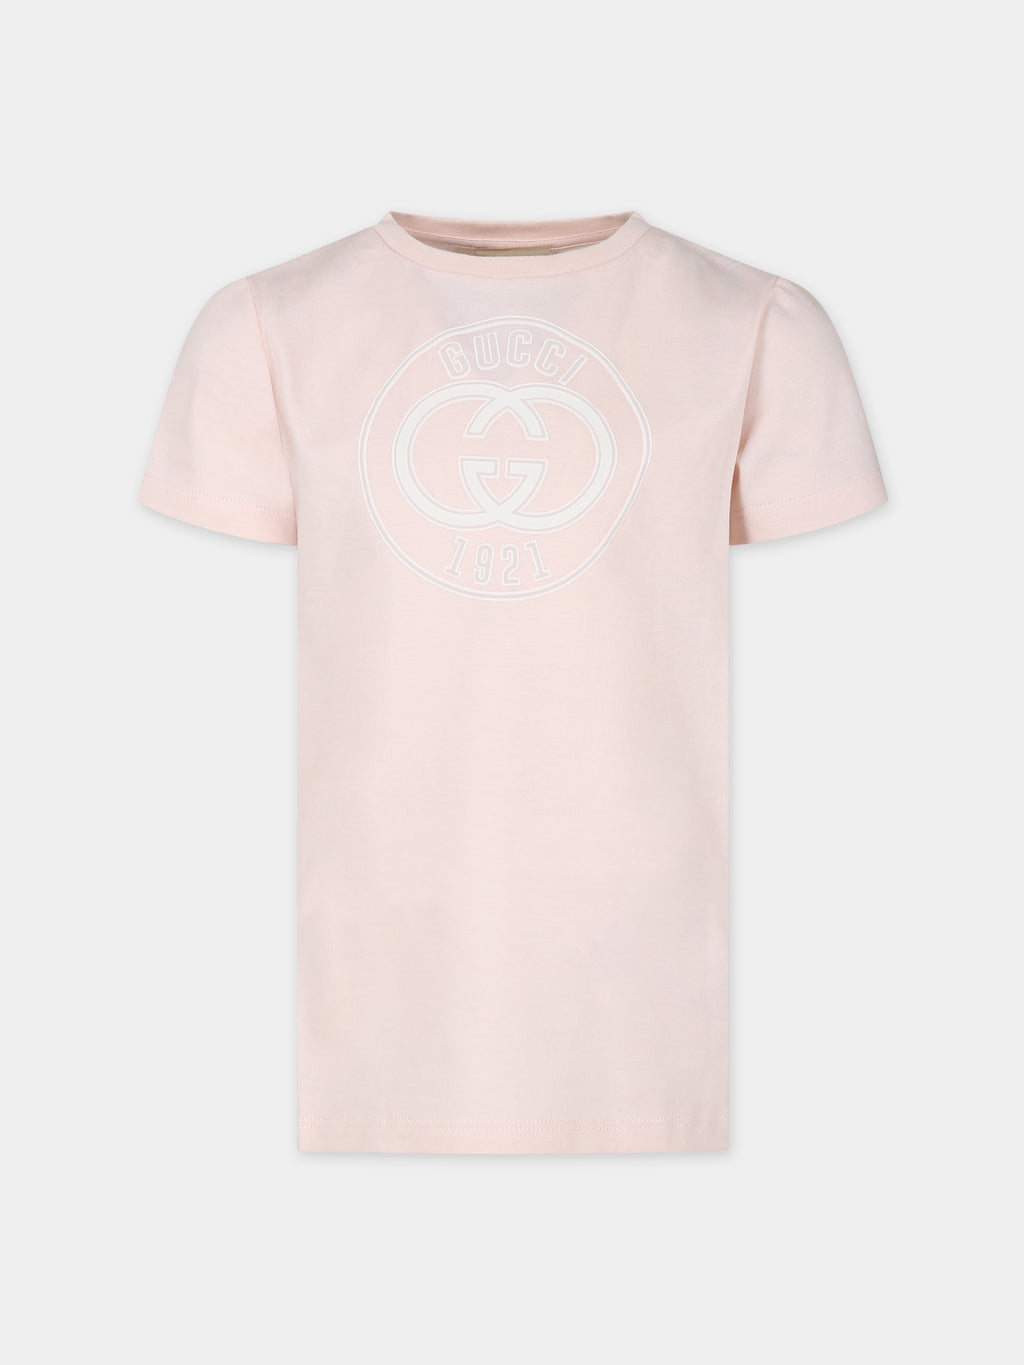 T-shirt rosa per bambina con logo Gucci 1921